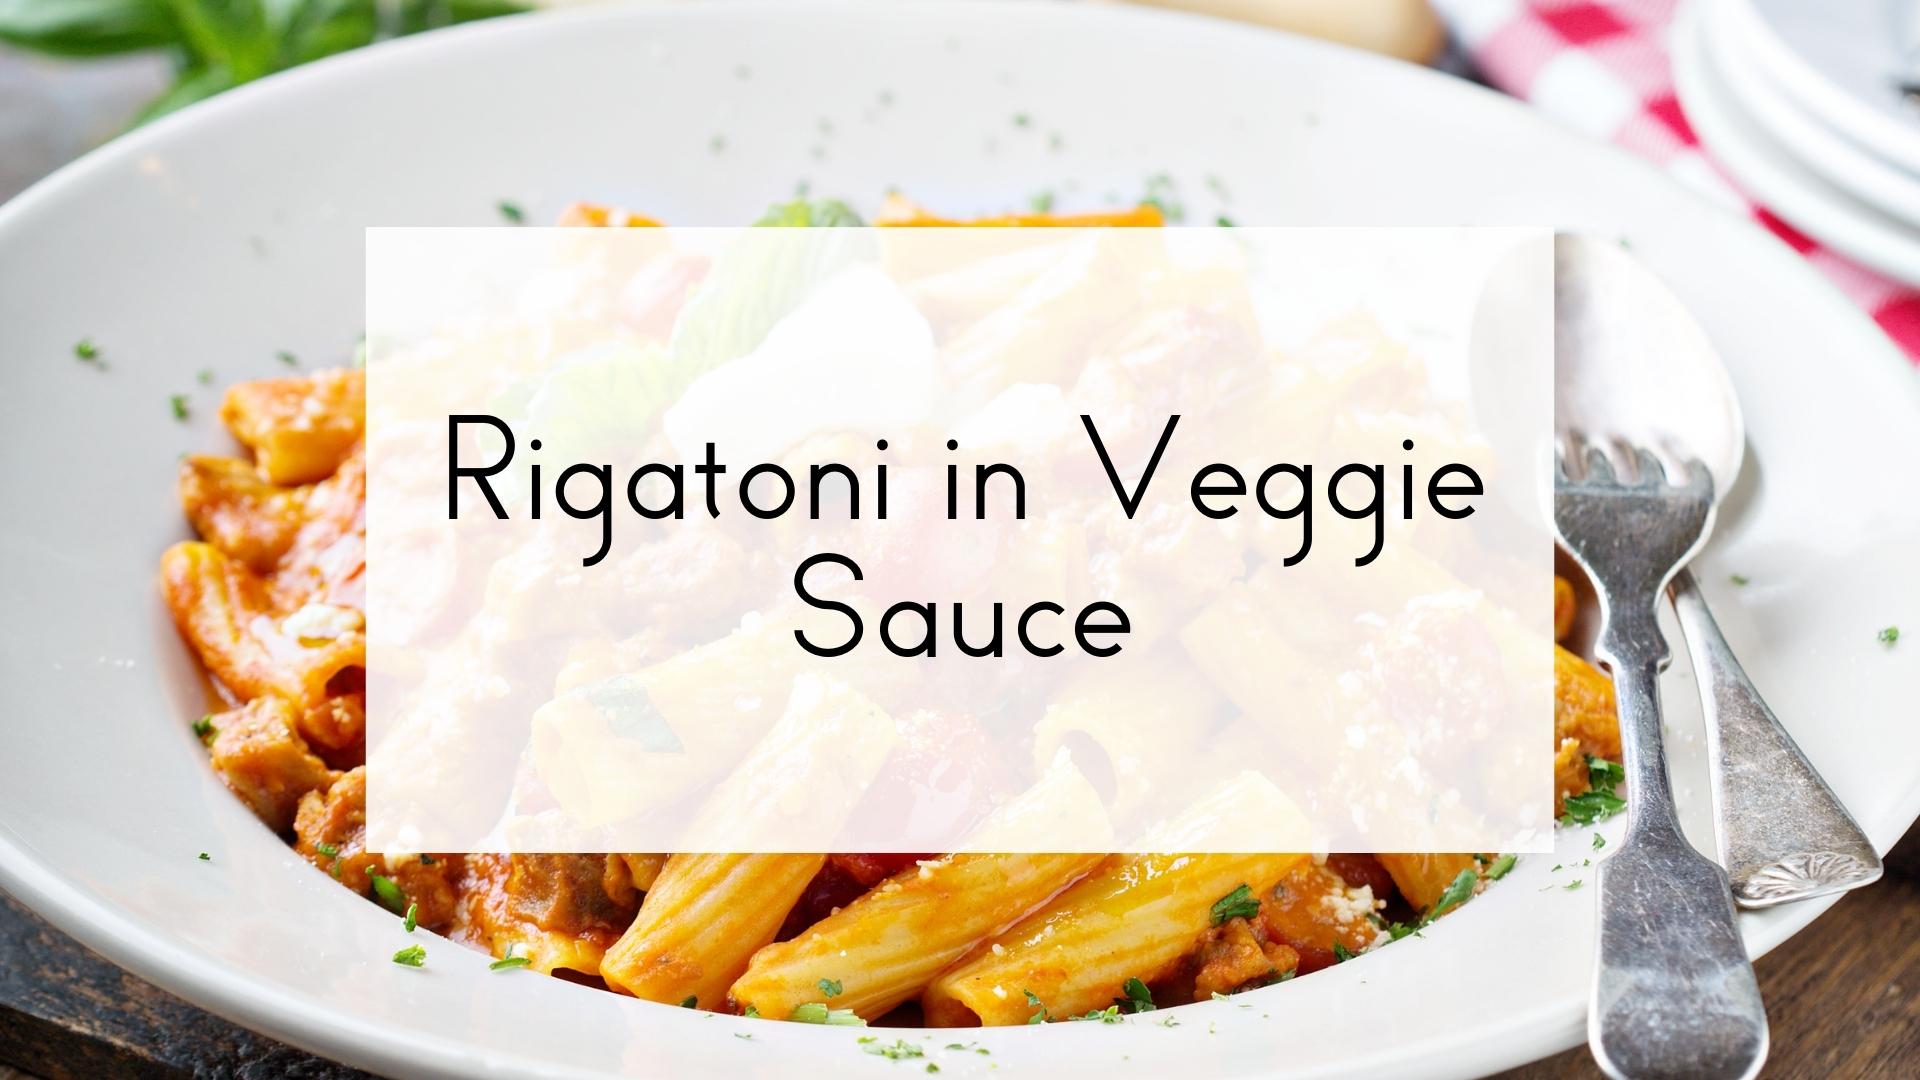 Rigatoni in Veggie Sauce